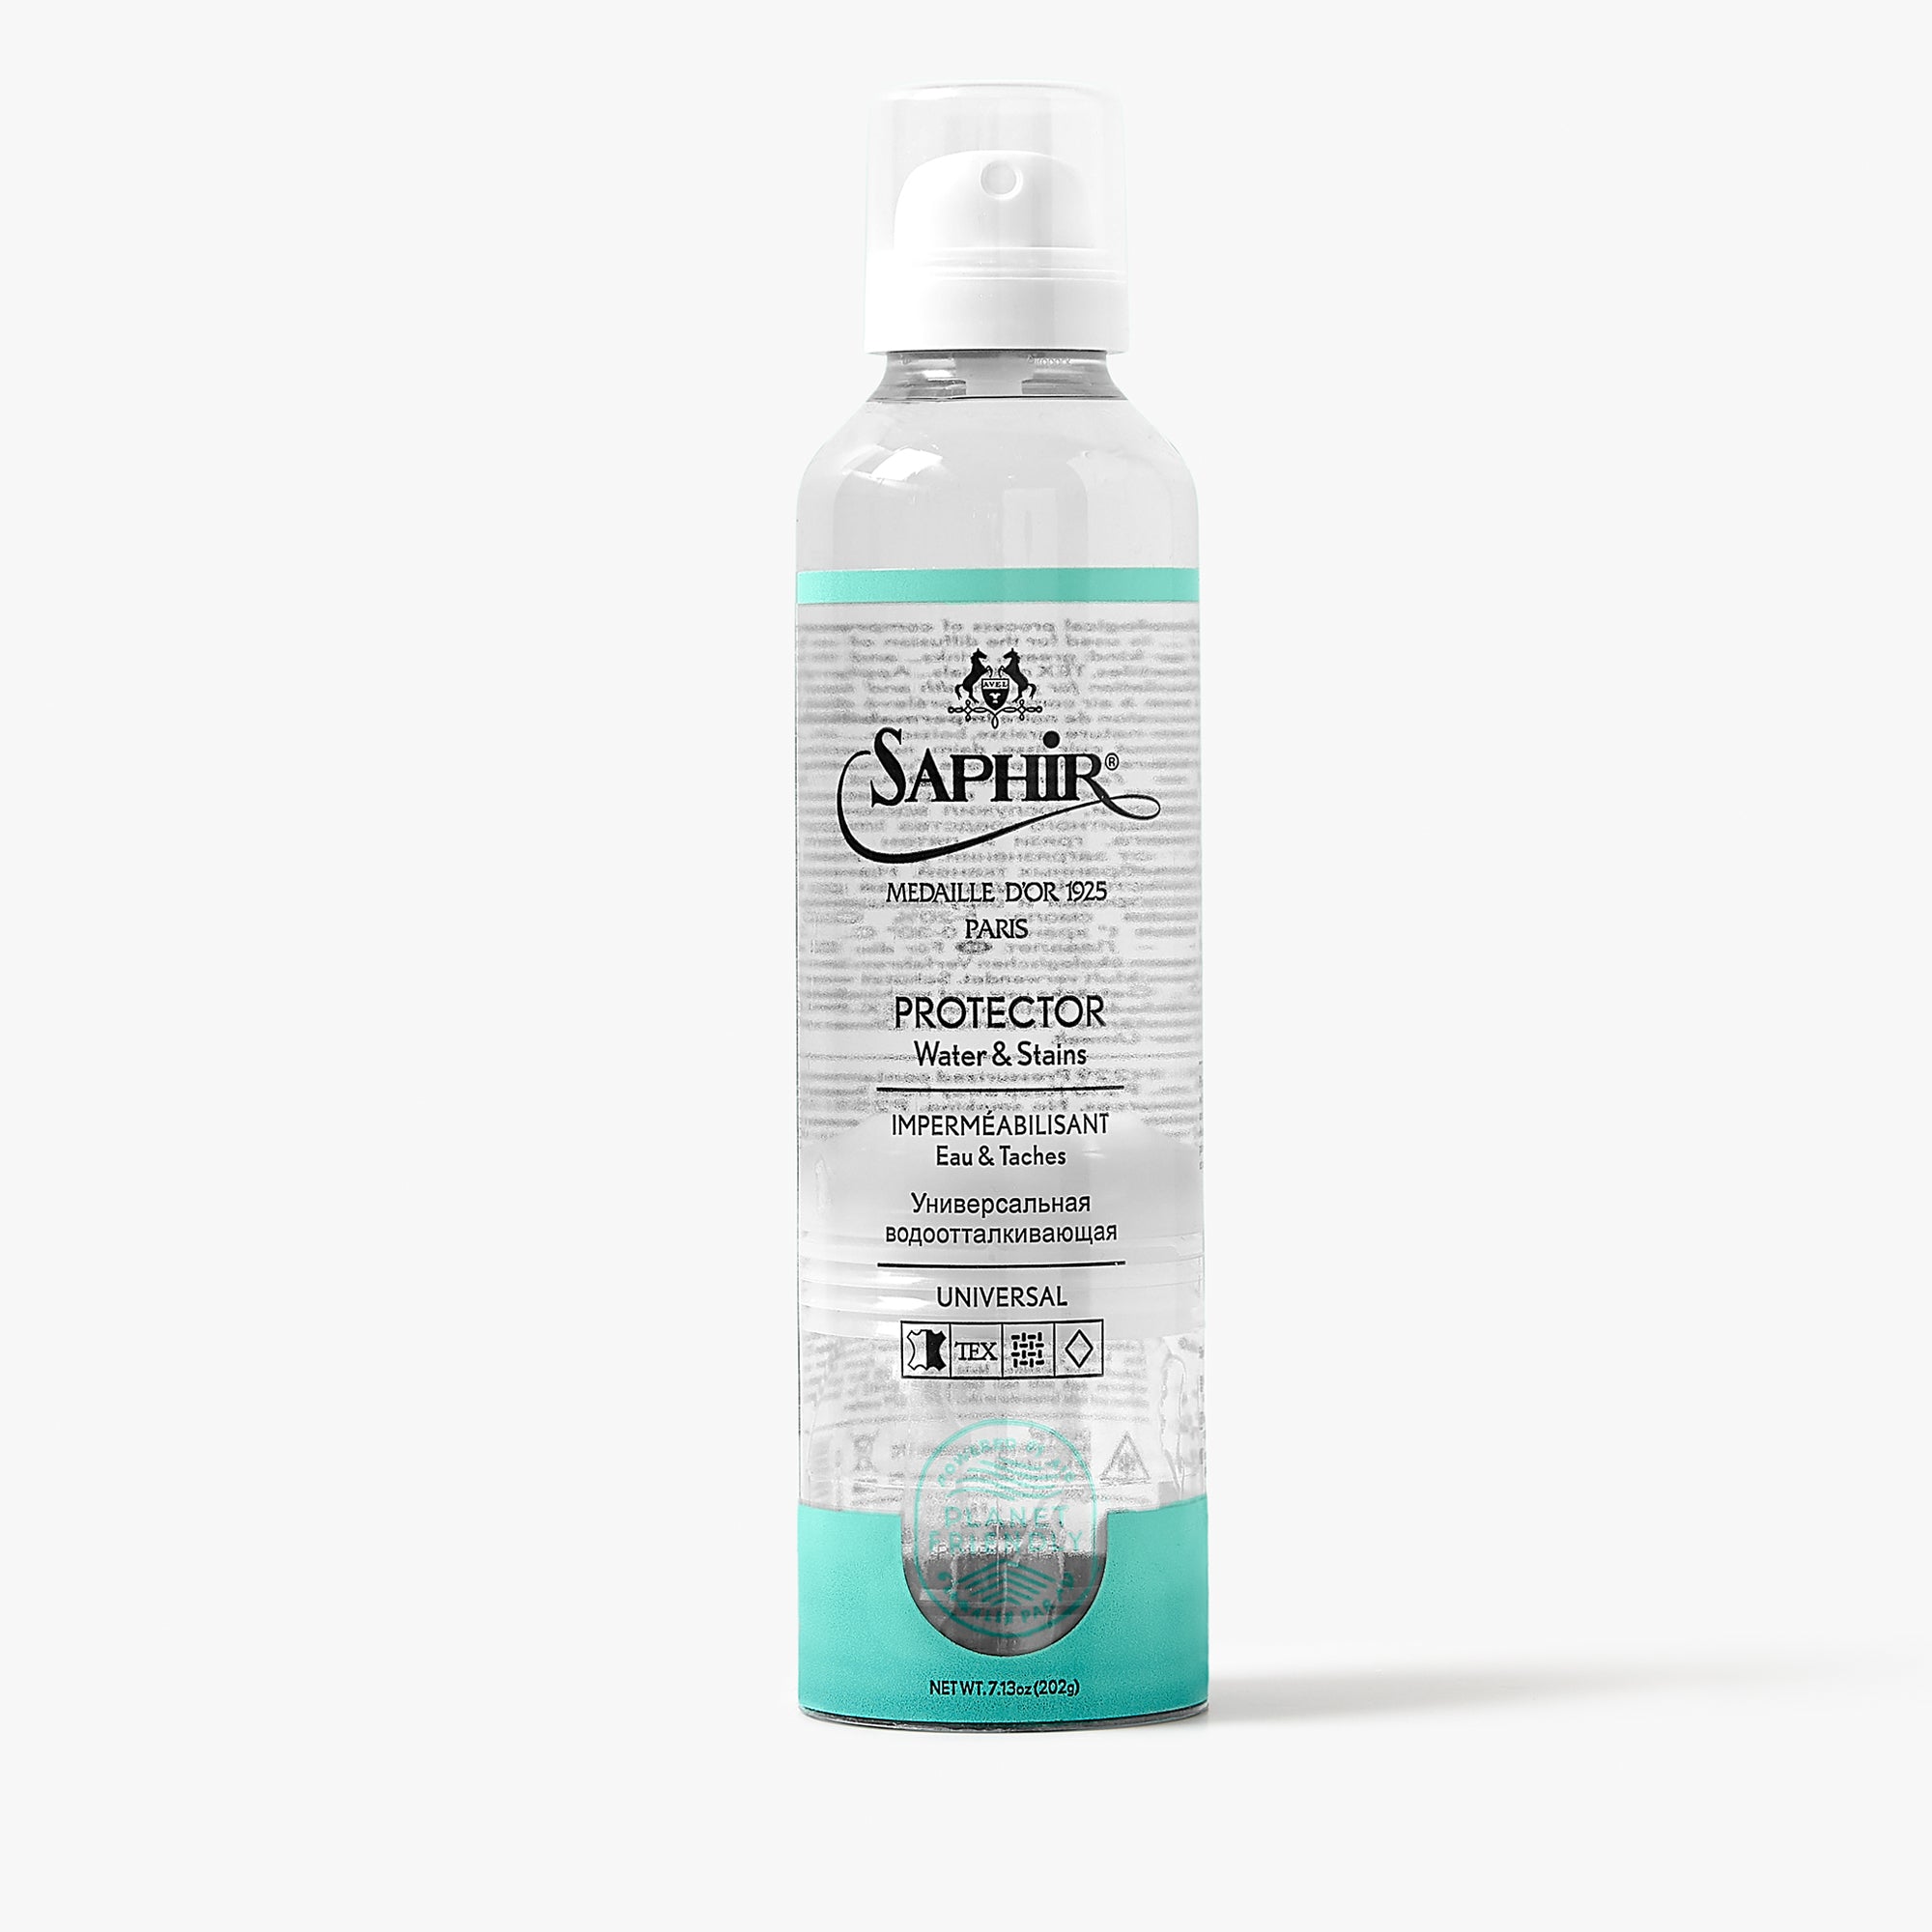 Saphir Water + Stain Protector - Aerosol Free